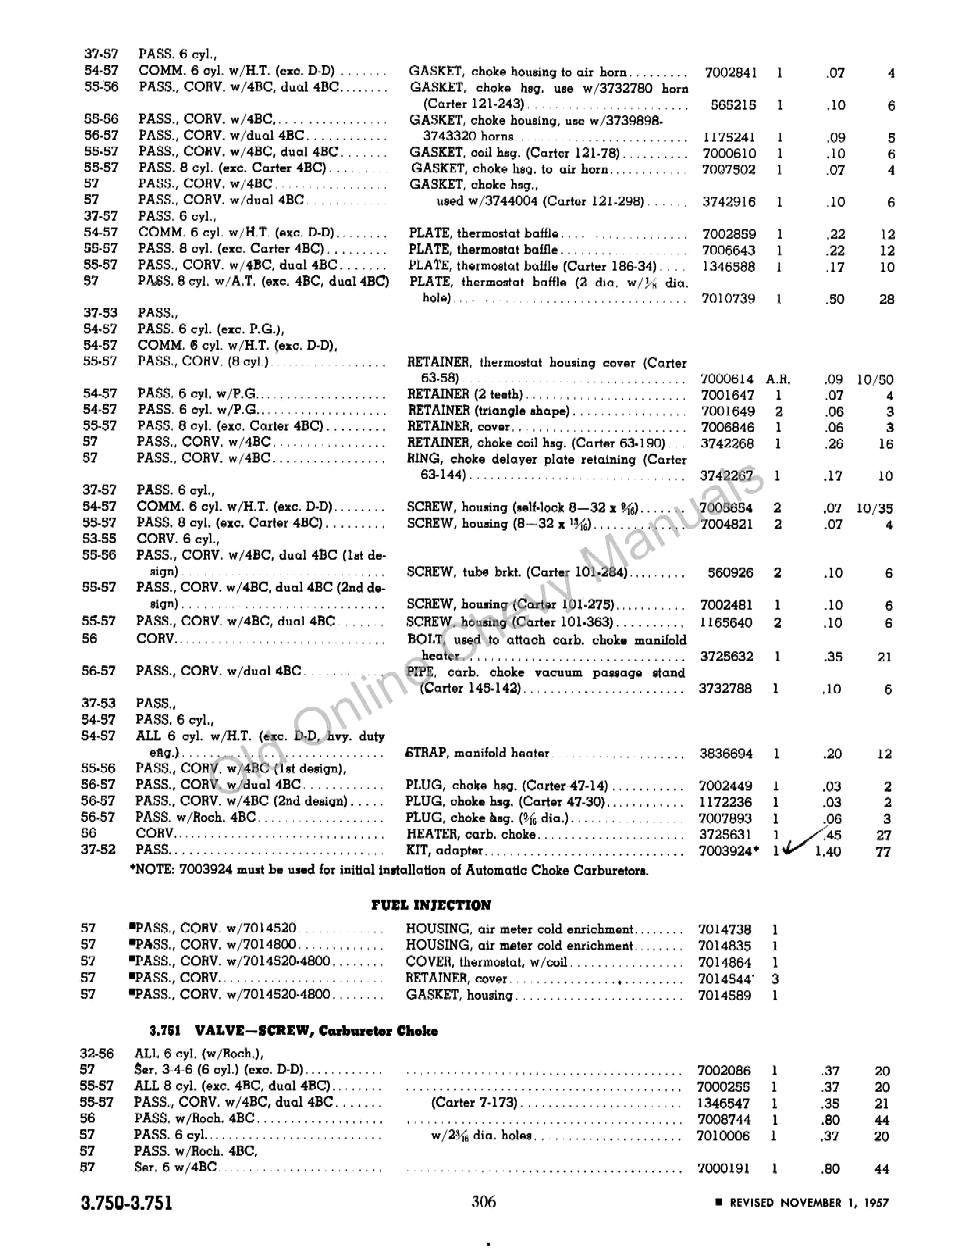 1929 - 1957 Chevrolet Master Parts & Accessories Catalog